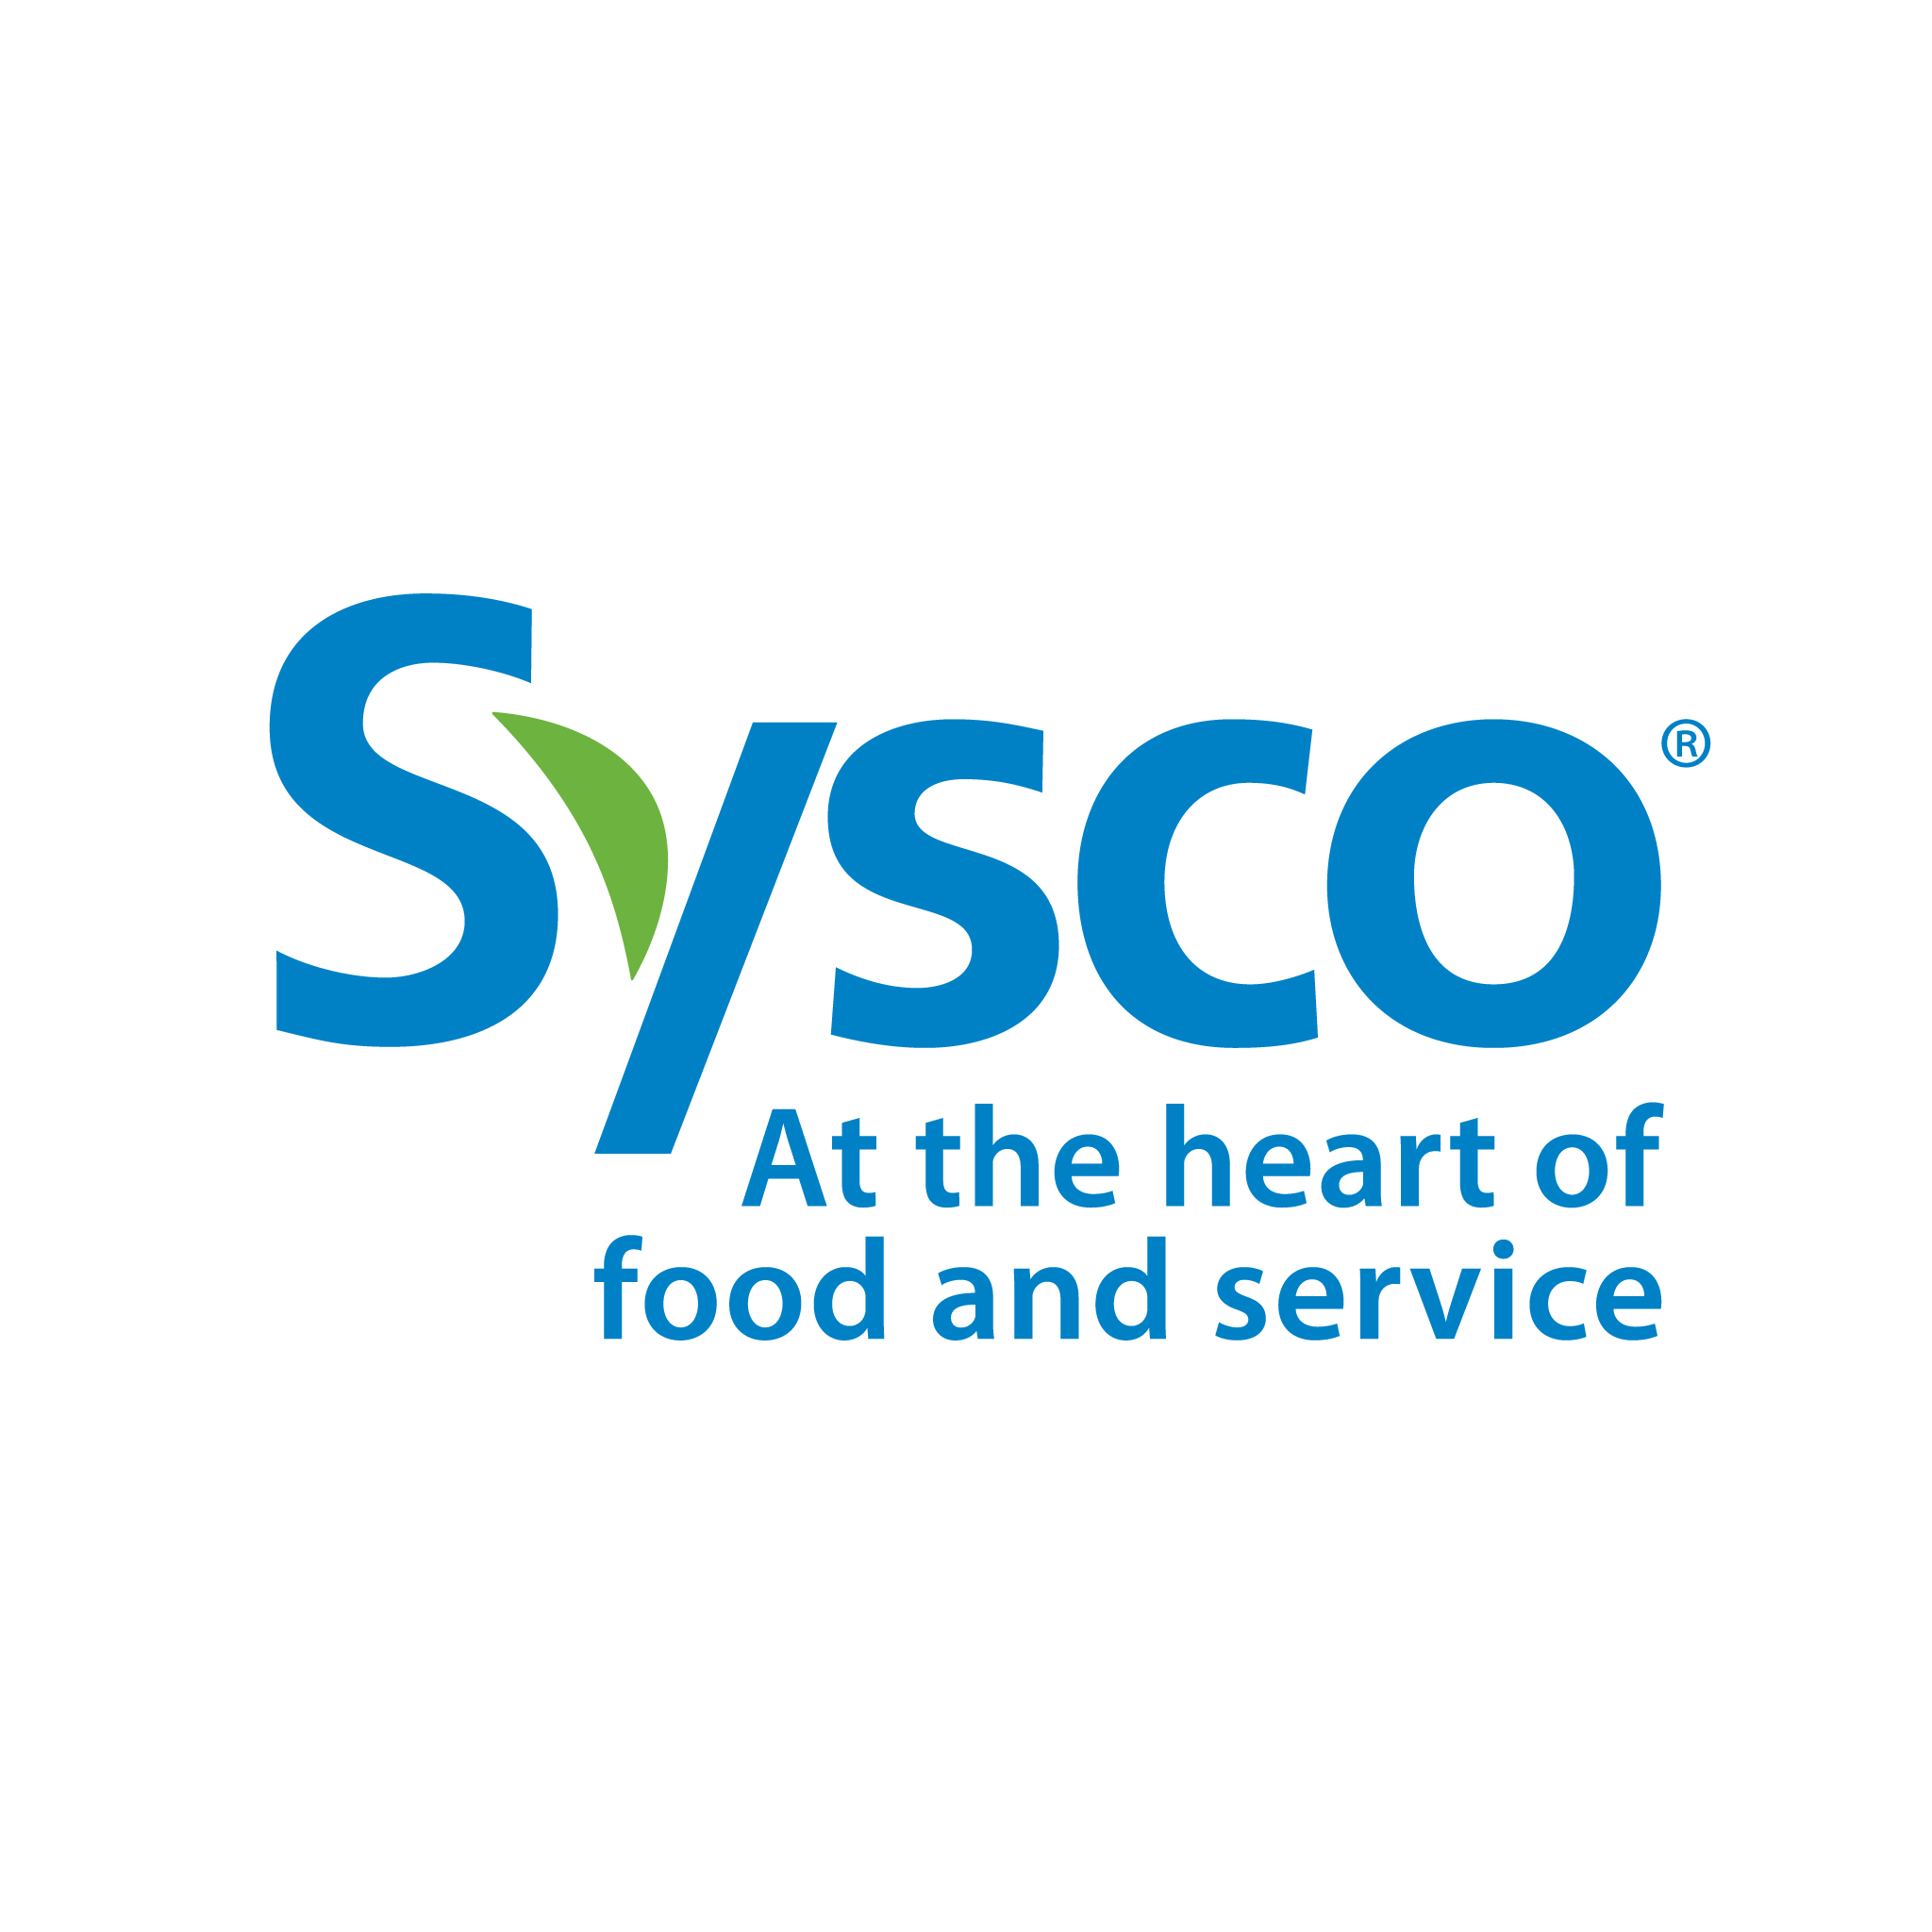 Sysco Image Logo